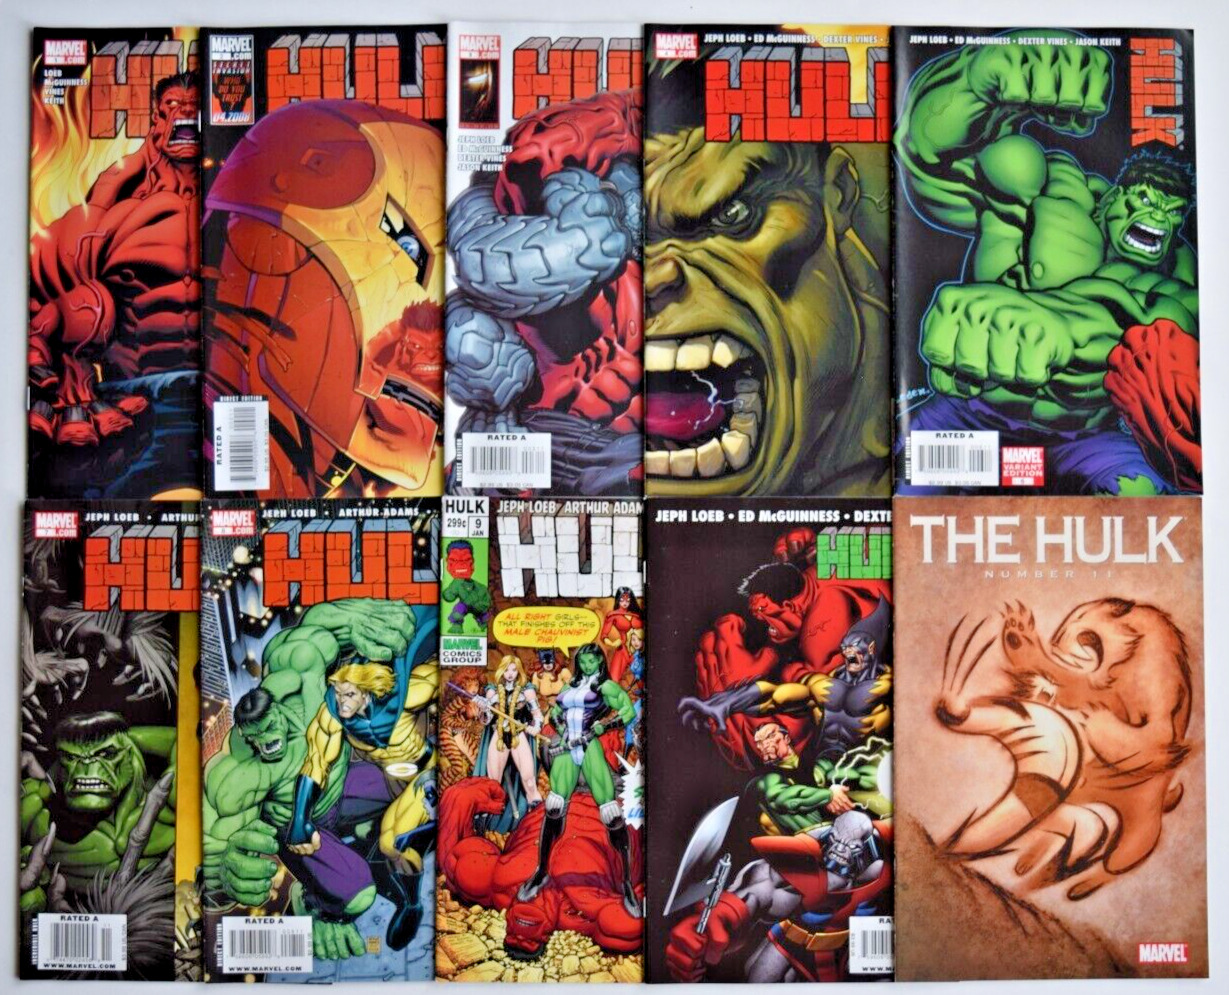 HULK (2008) 50 ISSUE COMIC RUN #1-4,6-22,24-28,32-37,39-54,56,57 MARVEL COMICS